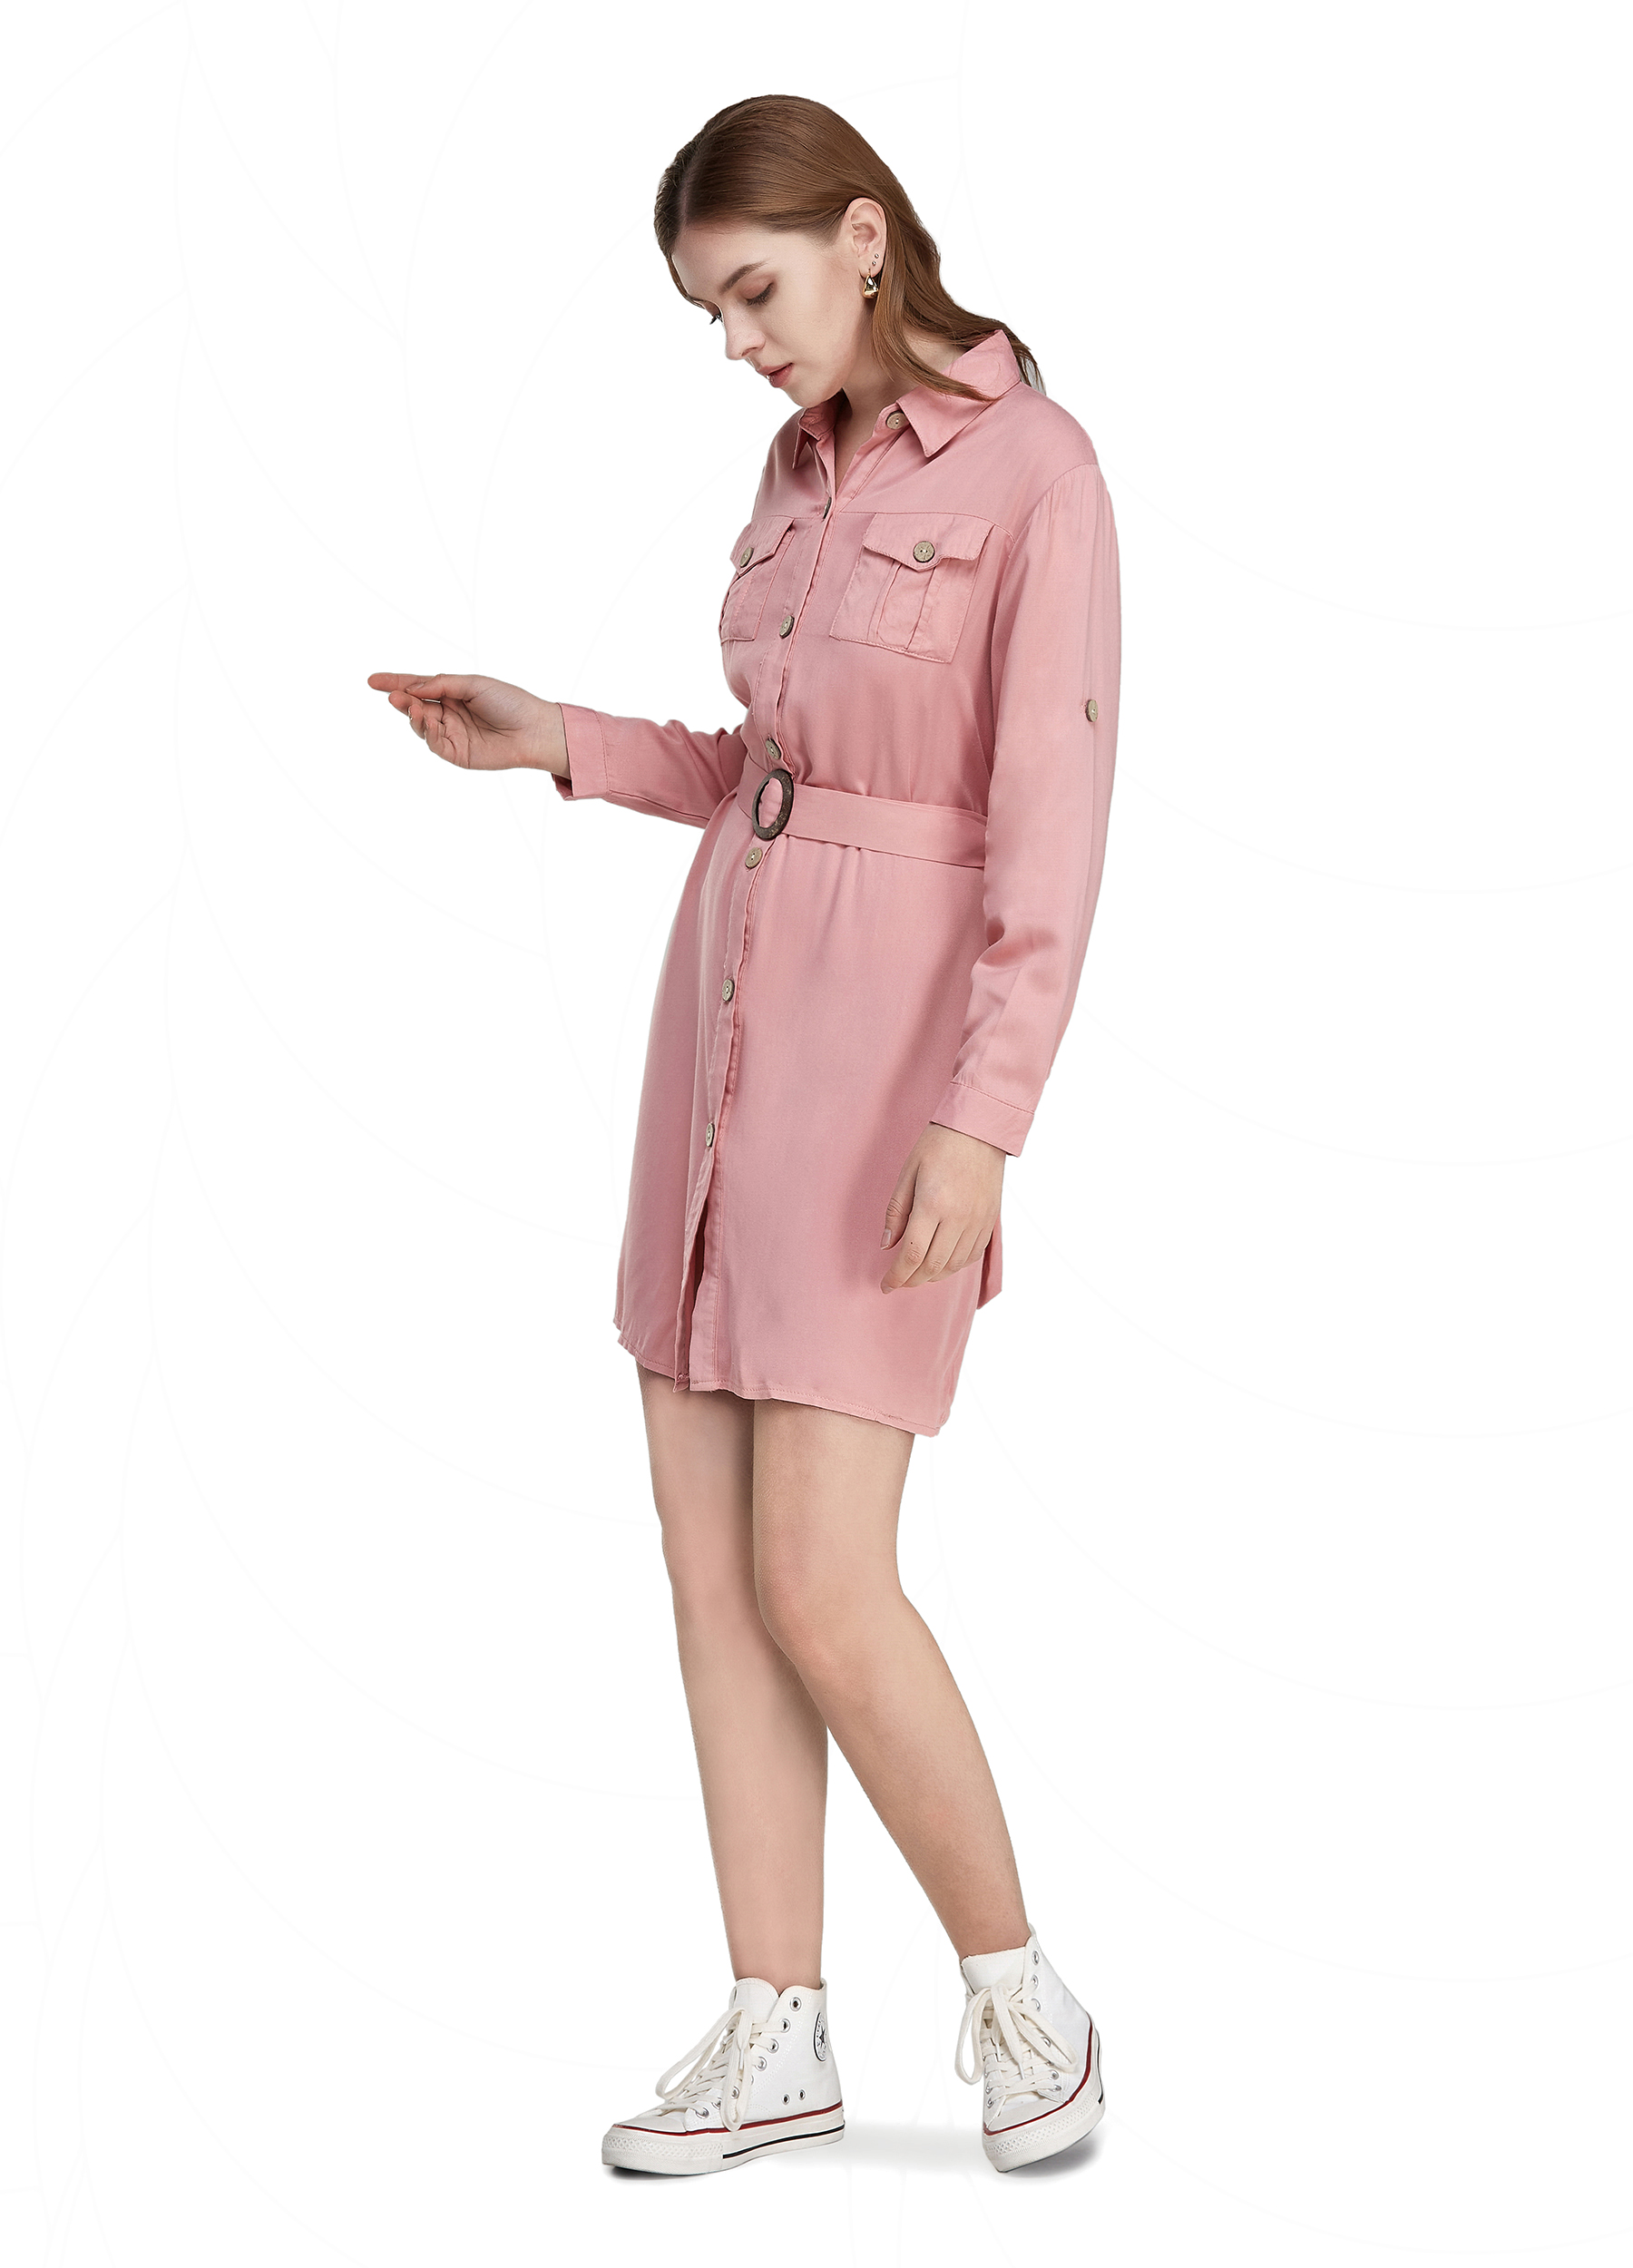 MECALA Women 3/4 Long Sleeve Button Down Shirt Dress Casual Midi Dress Pink L - image 4 of 10